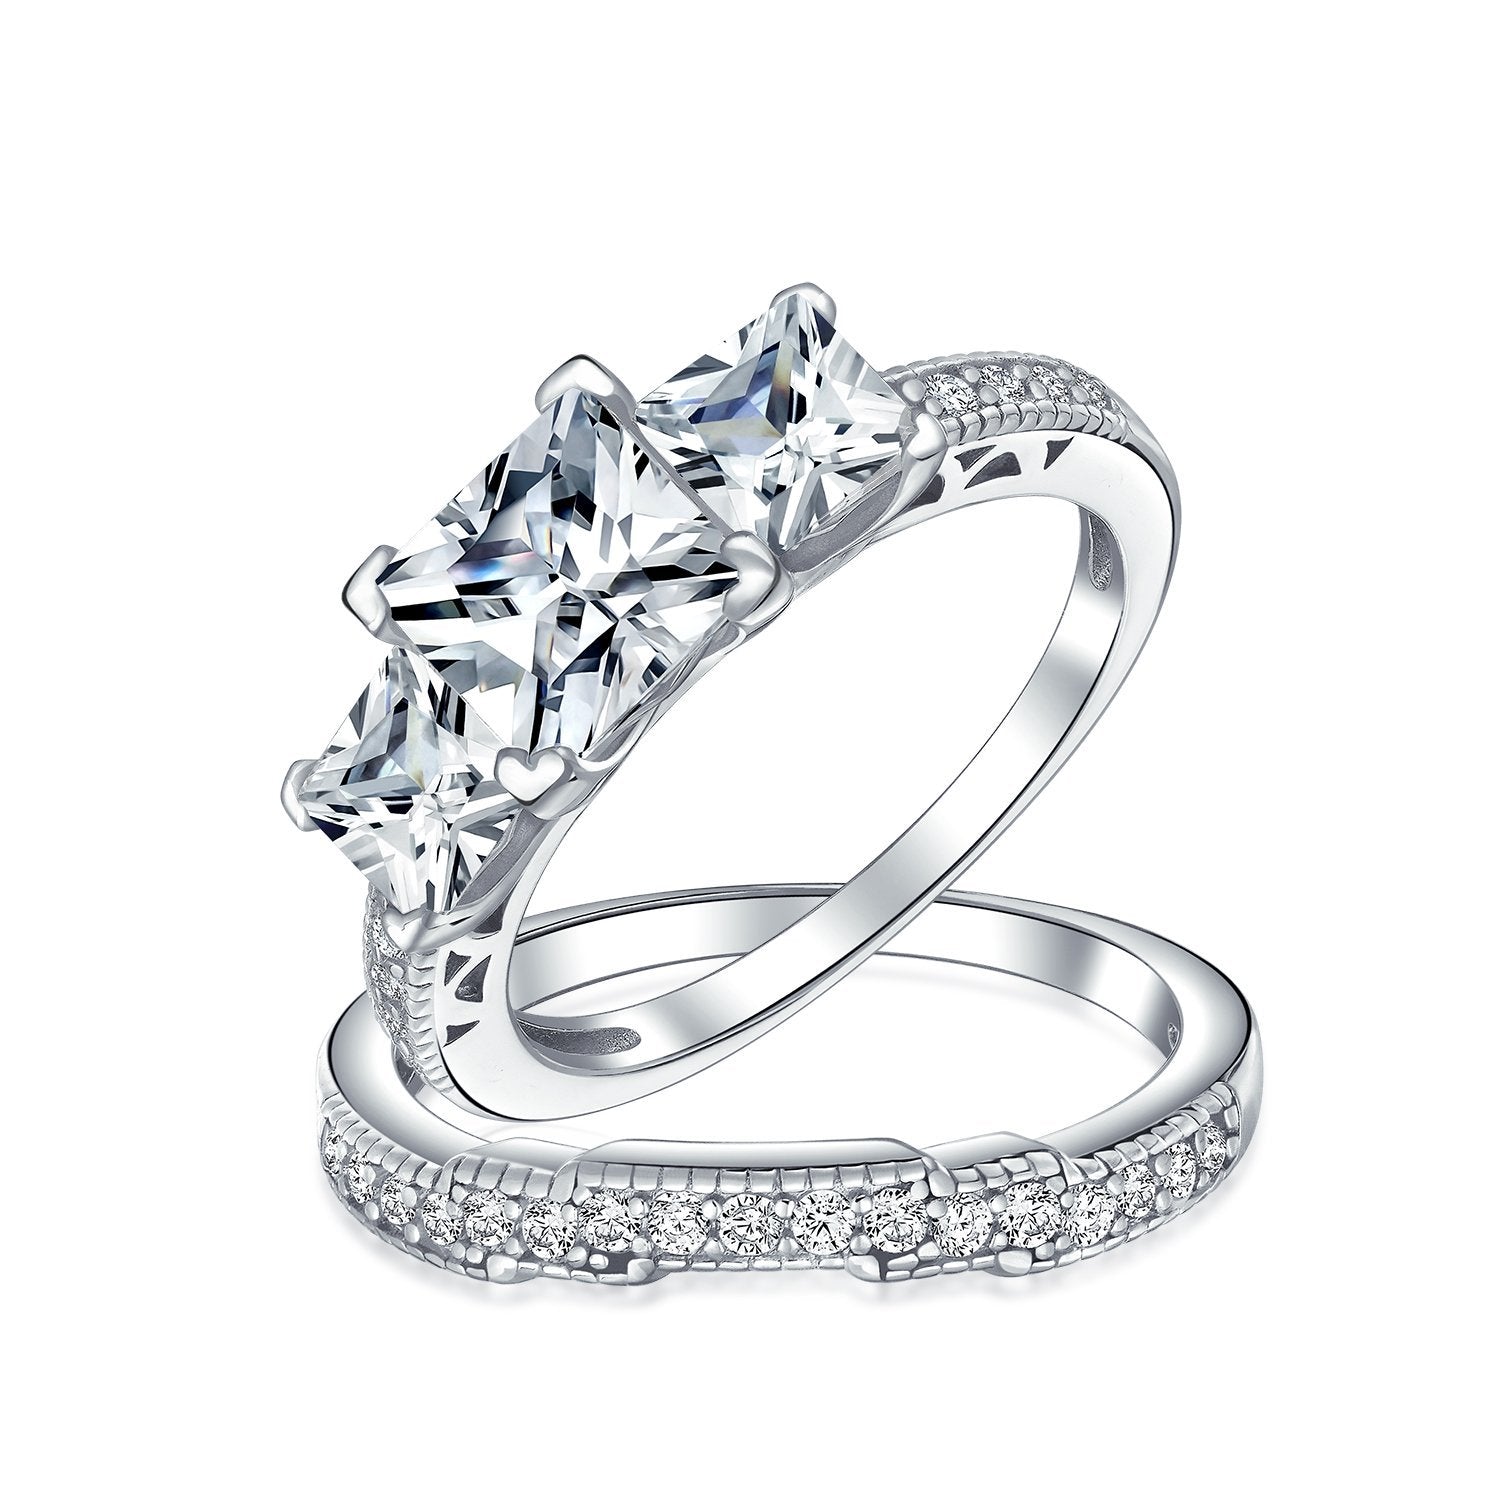 3CT Princess Cut 3 Stone CZ Engagement Wedding Ring Sterling Silver - Joyeria Lady